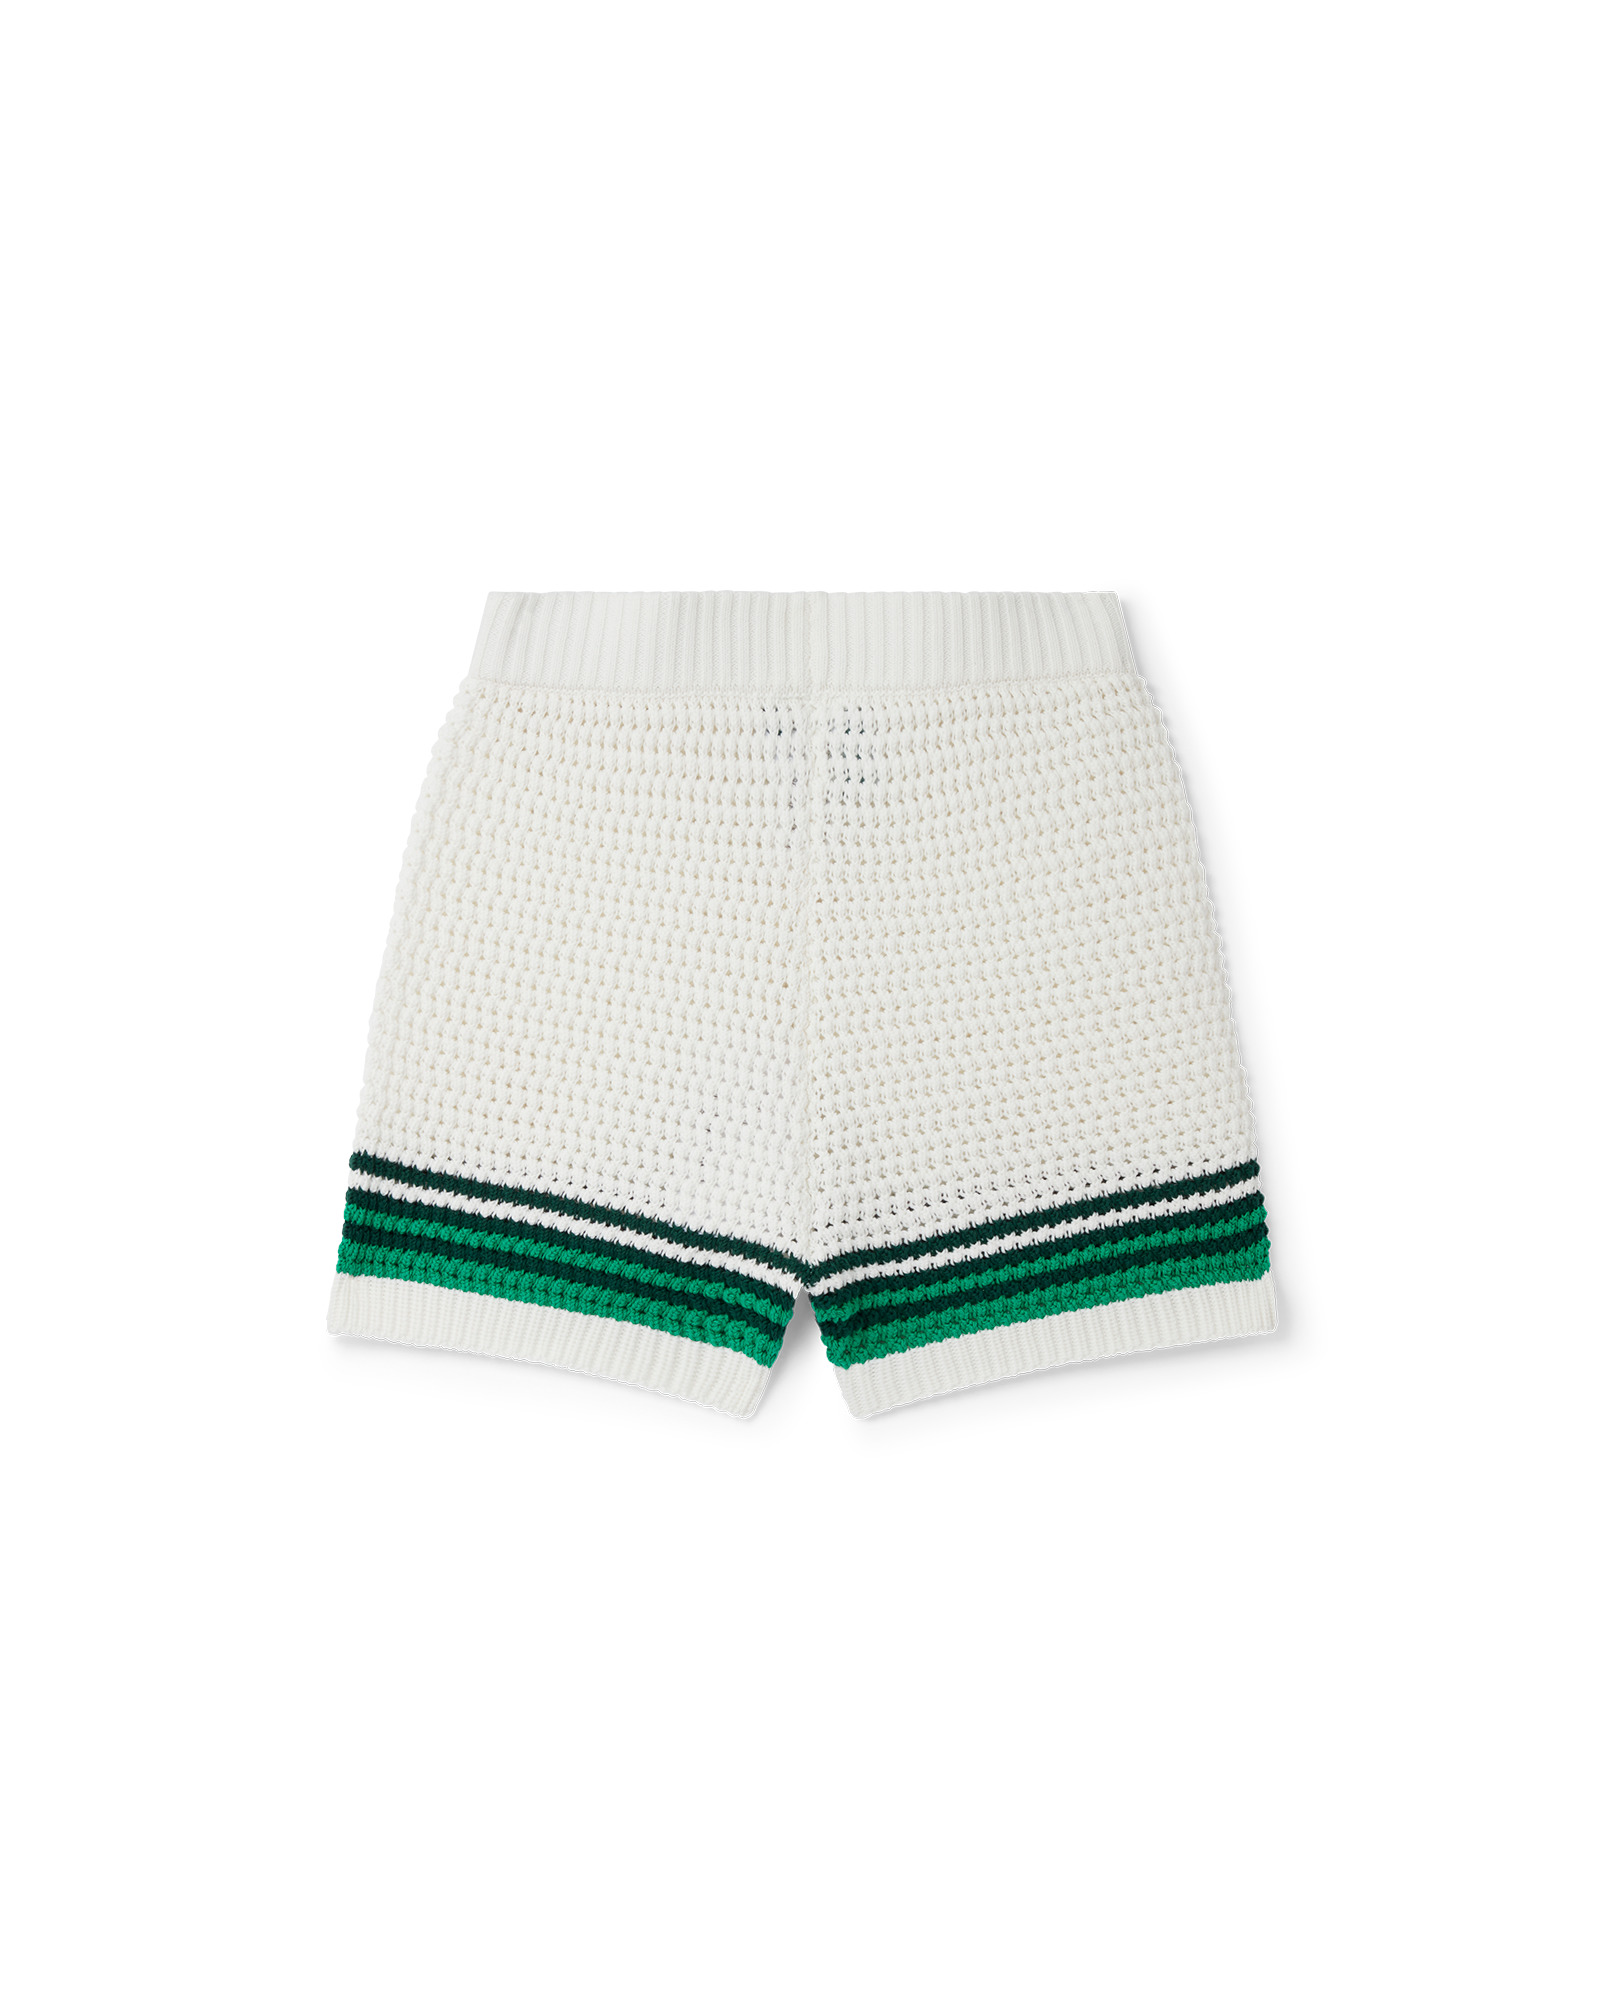 Tennis Crochet Shorts - 5